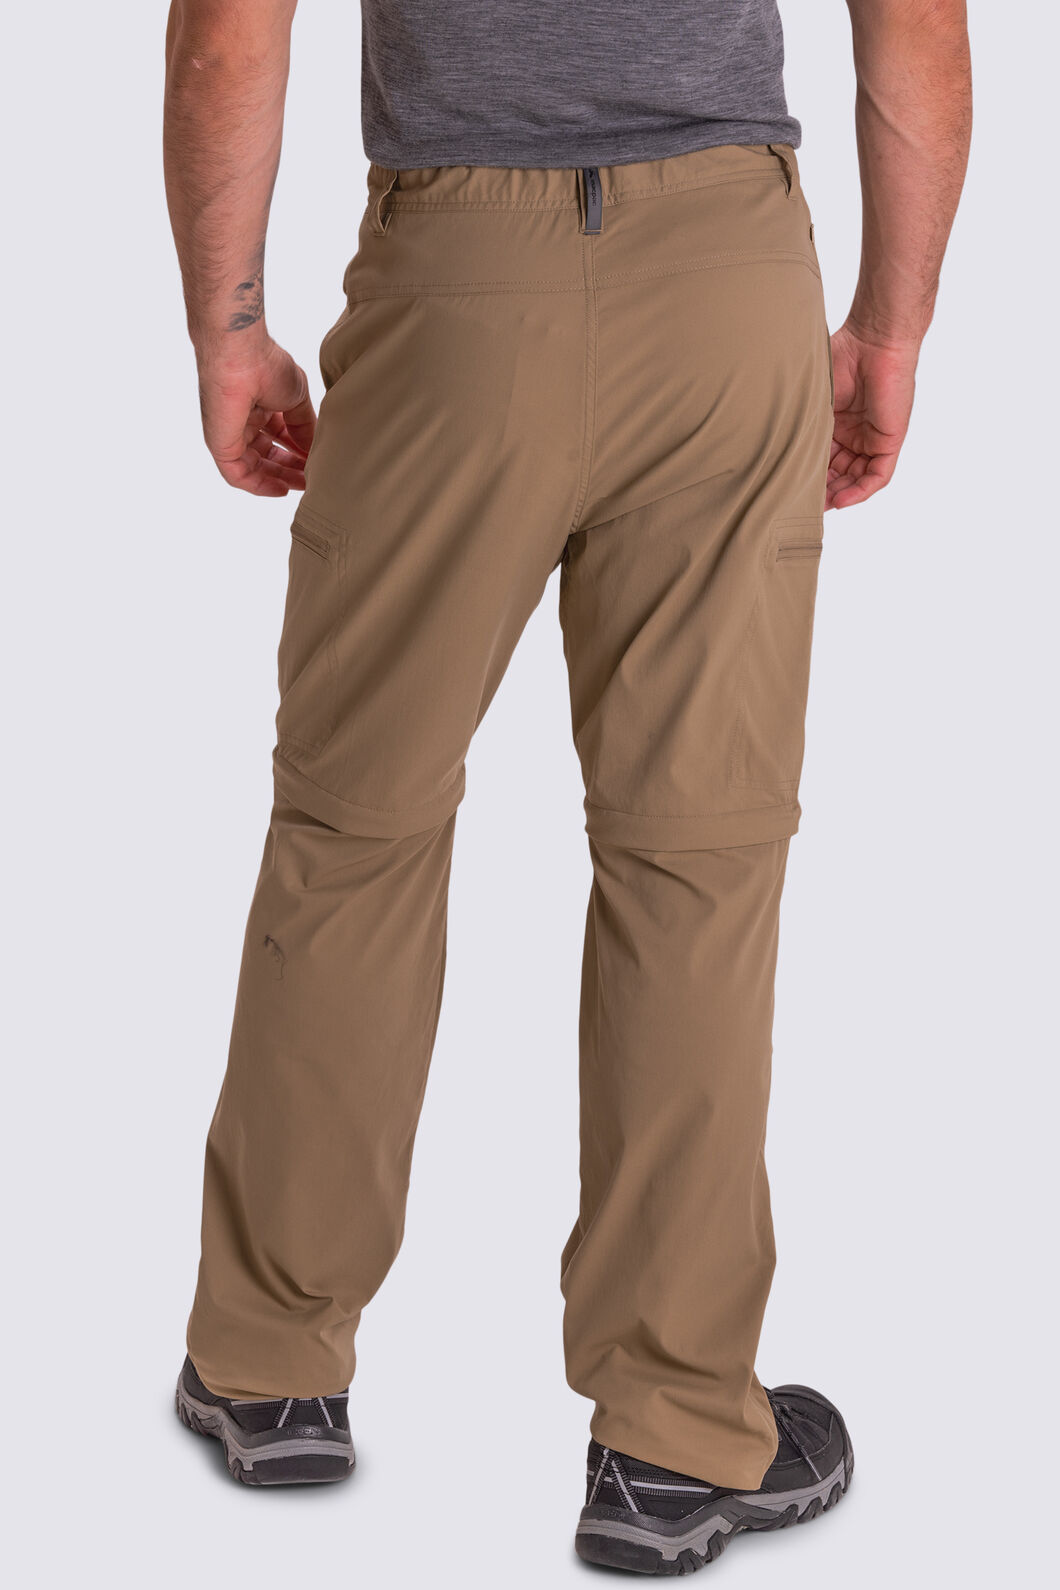 Macpac Rockover Convertible Pants — Men's